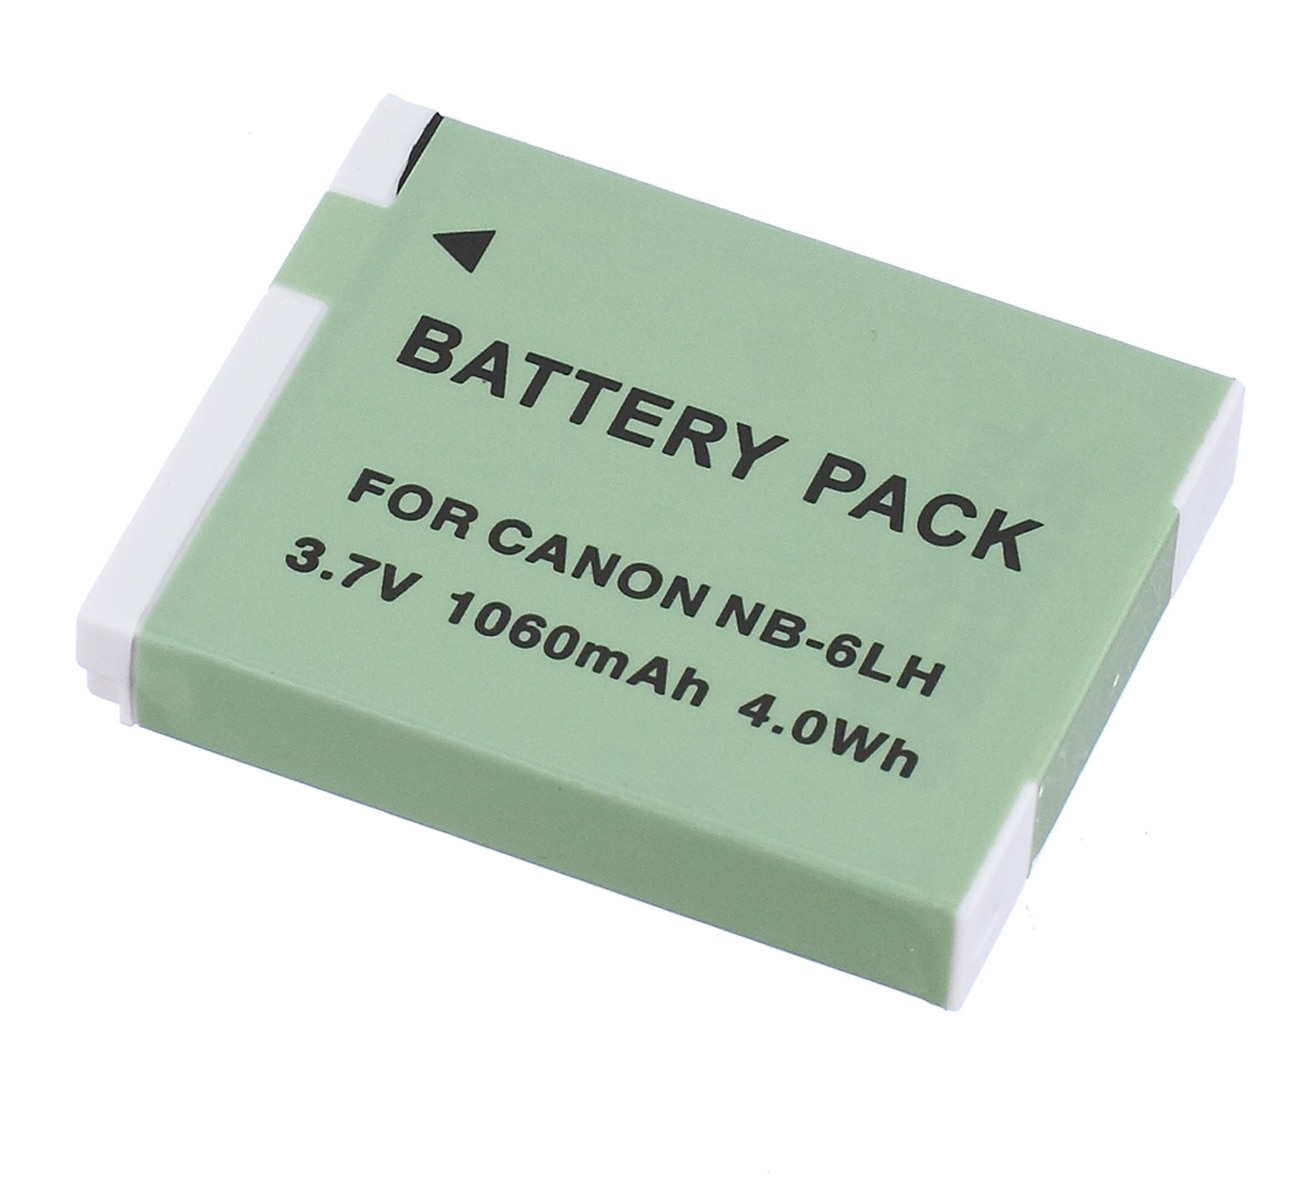 Batterij Pack Voor Canon NB-6L, NB6L, NB-6LH, NB6LH Lithium-Ion Oplaadbare